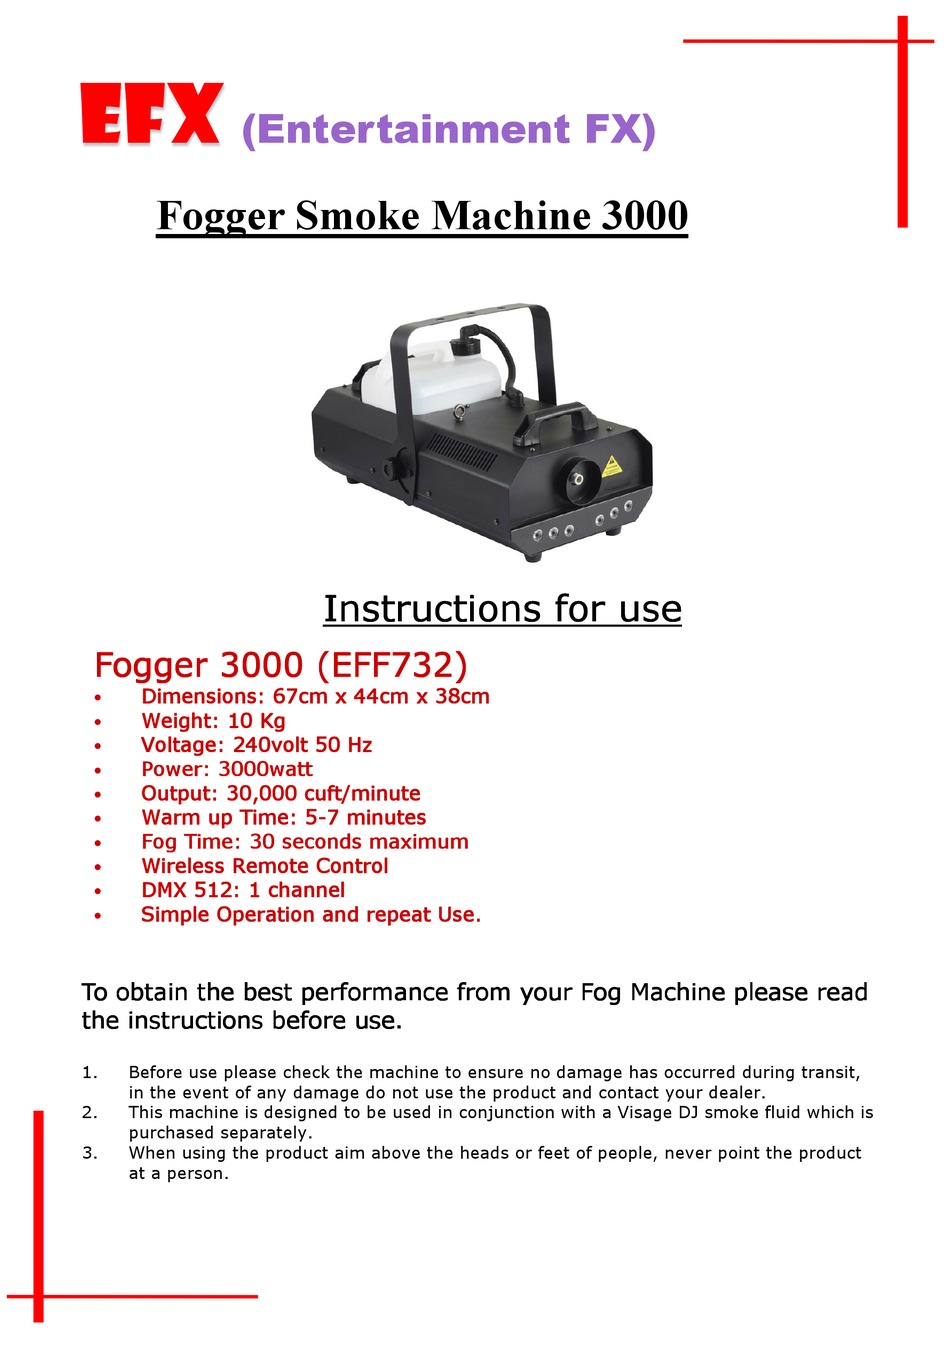 Fogger-3000 cs go skin download the last version for apple